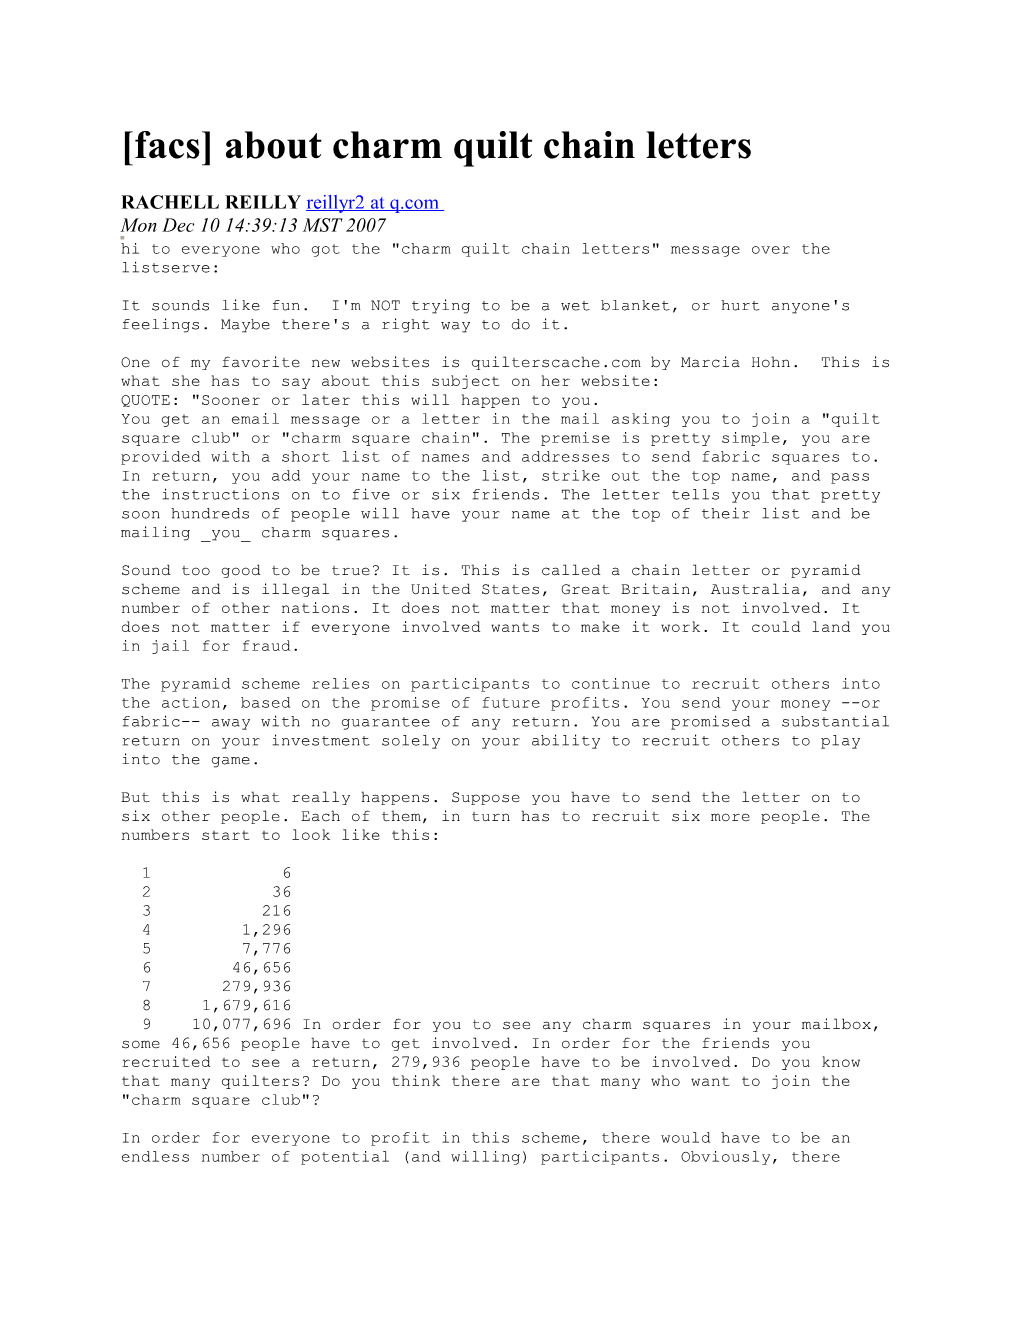 Facs About Charm Quilt Chain Letters